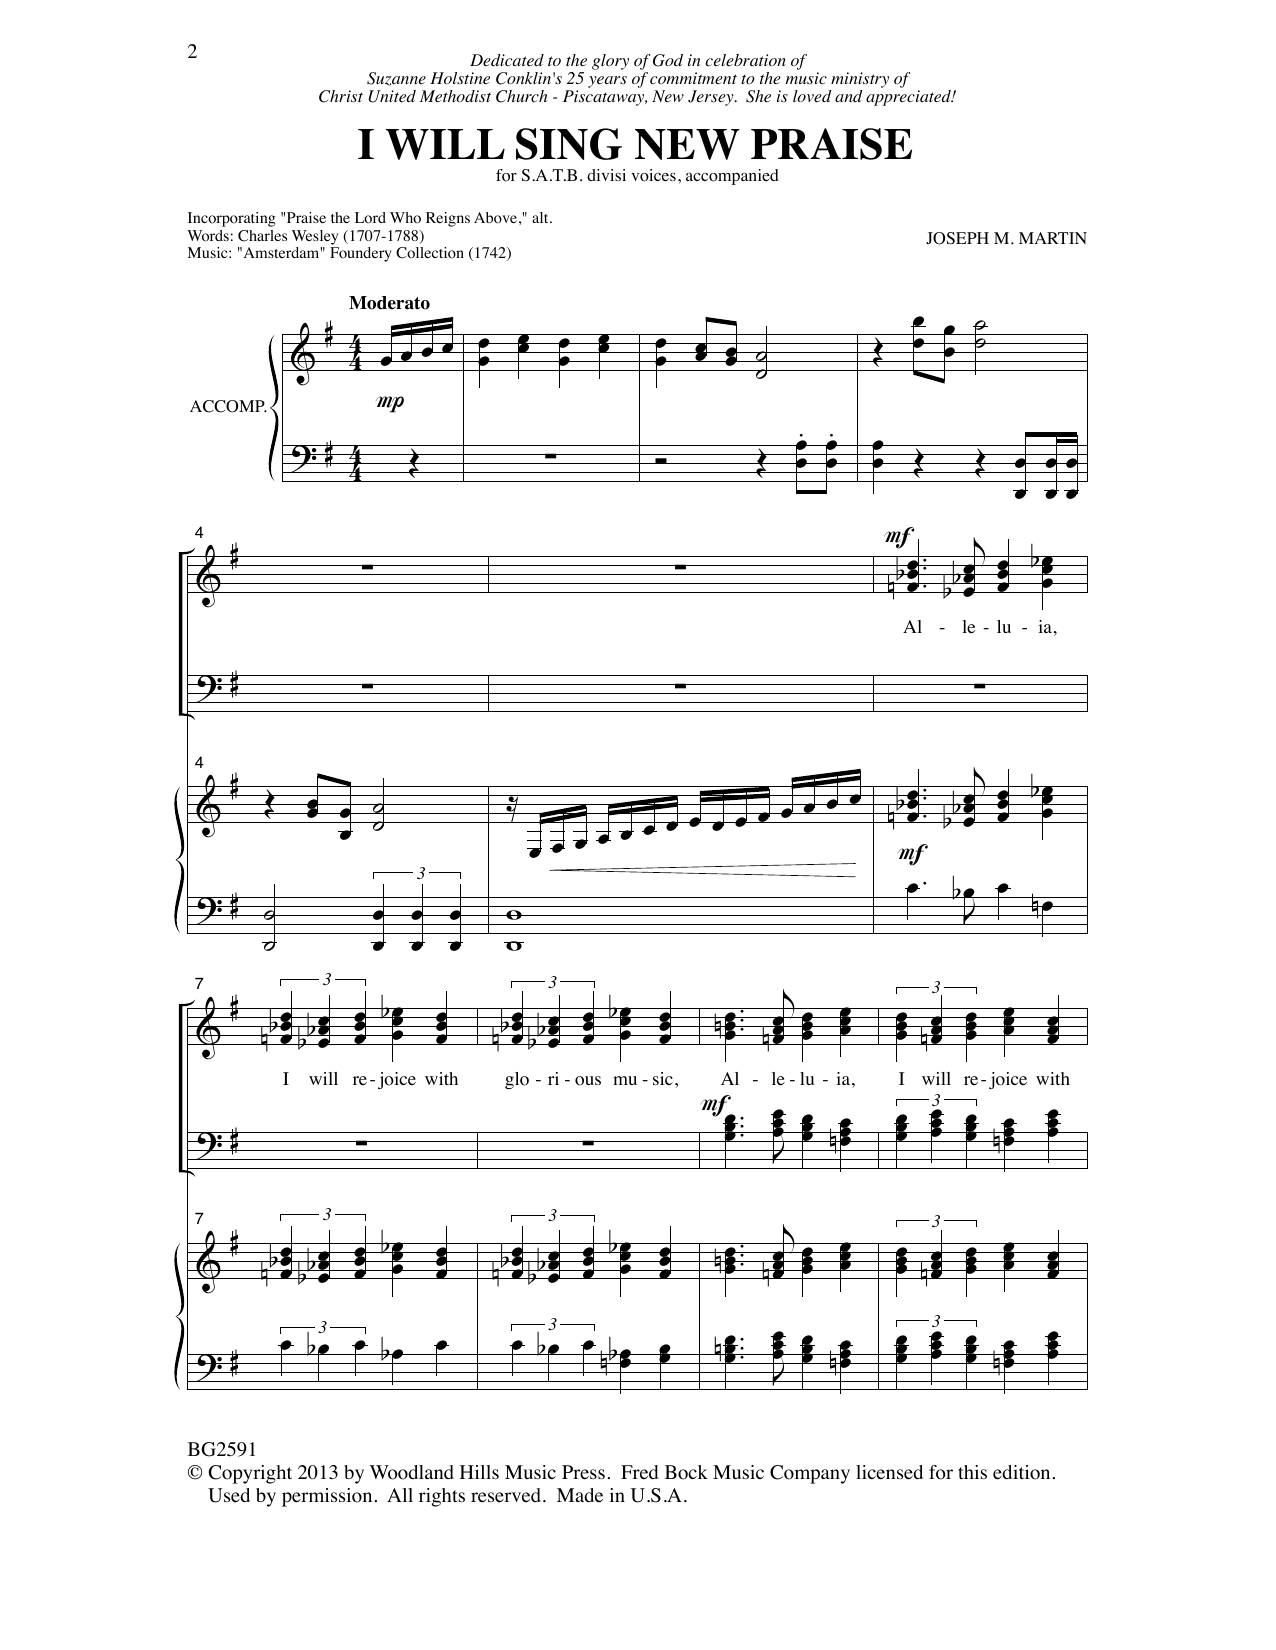 Joseph Martin I Will Sing New Praise Sheet Music Notes & Chords for SATB Choir - Download or Print PDF